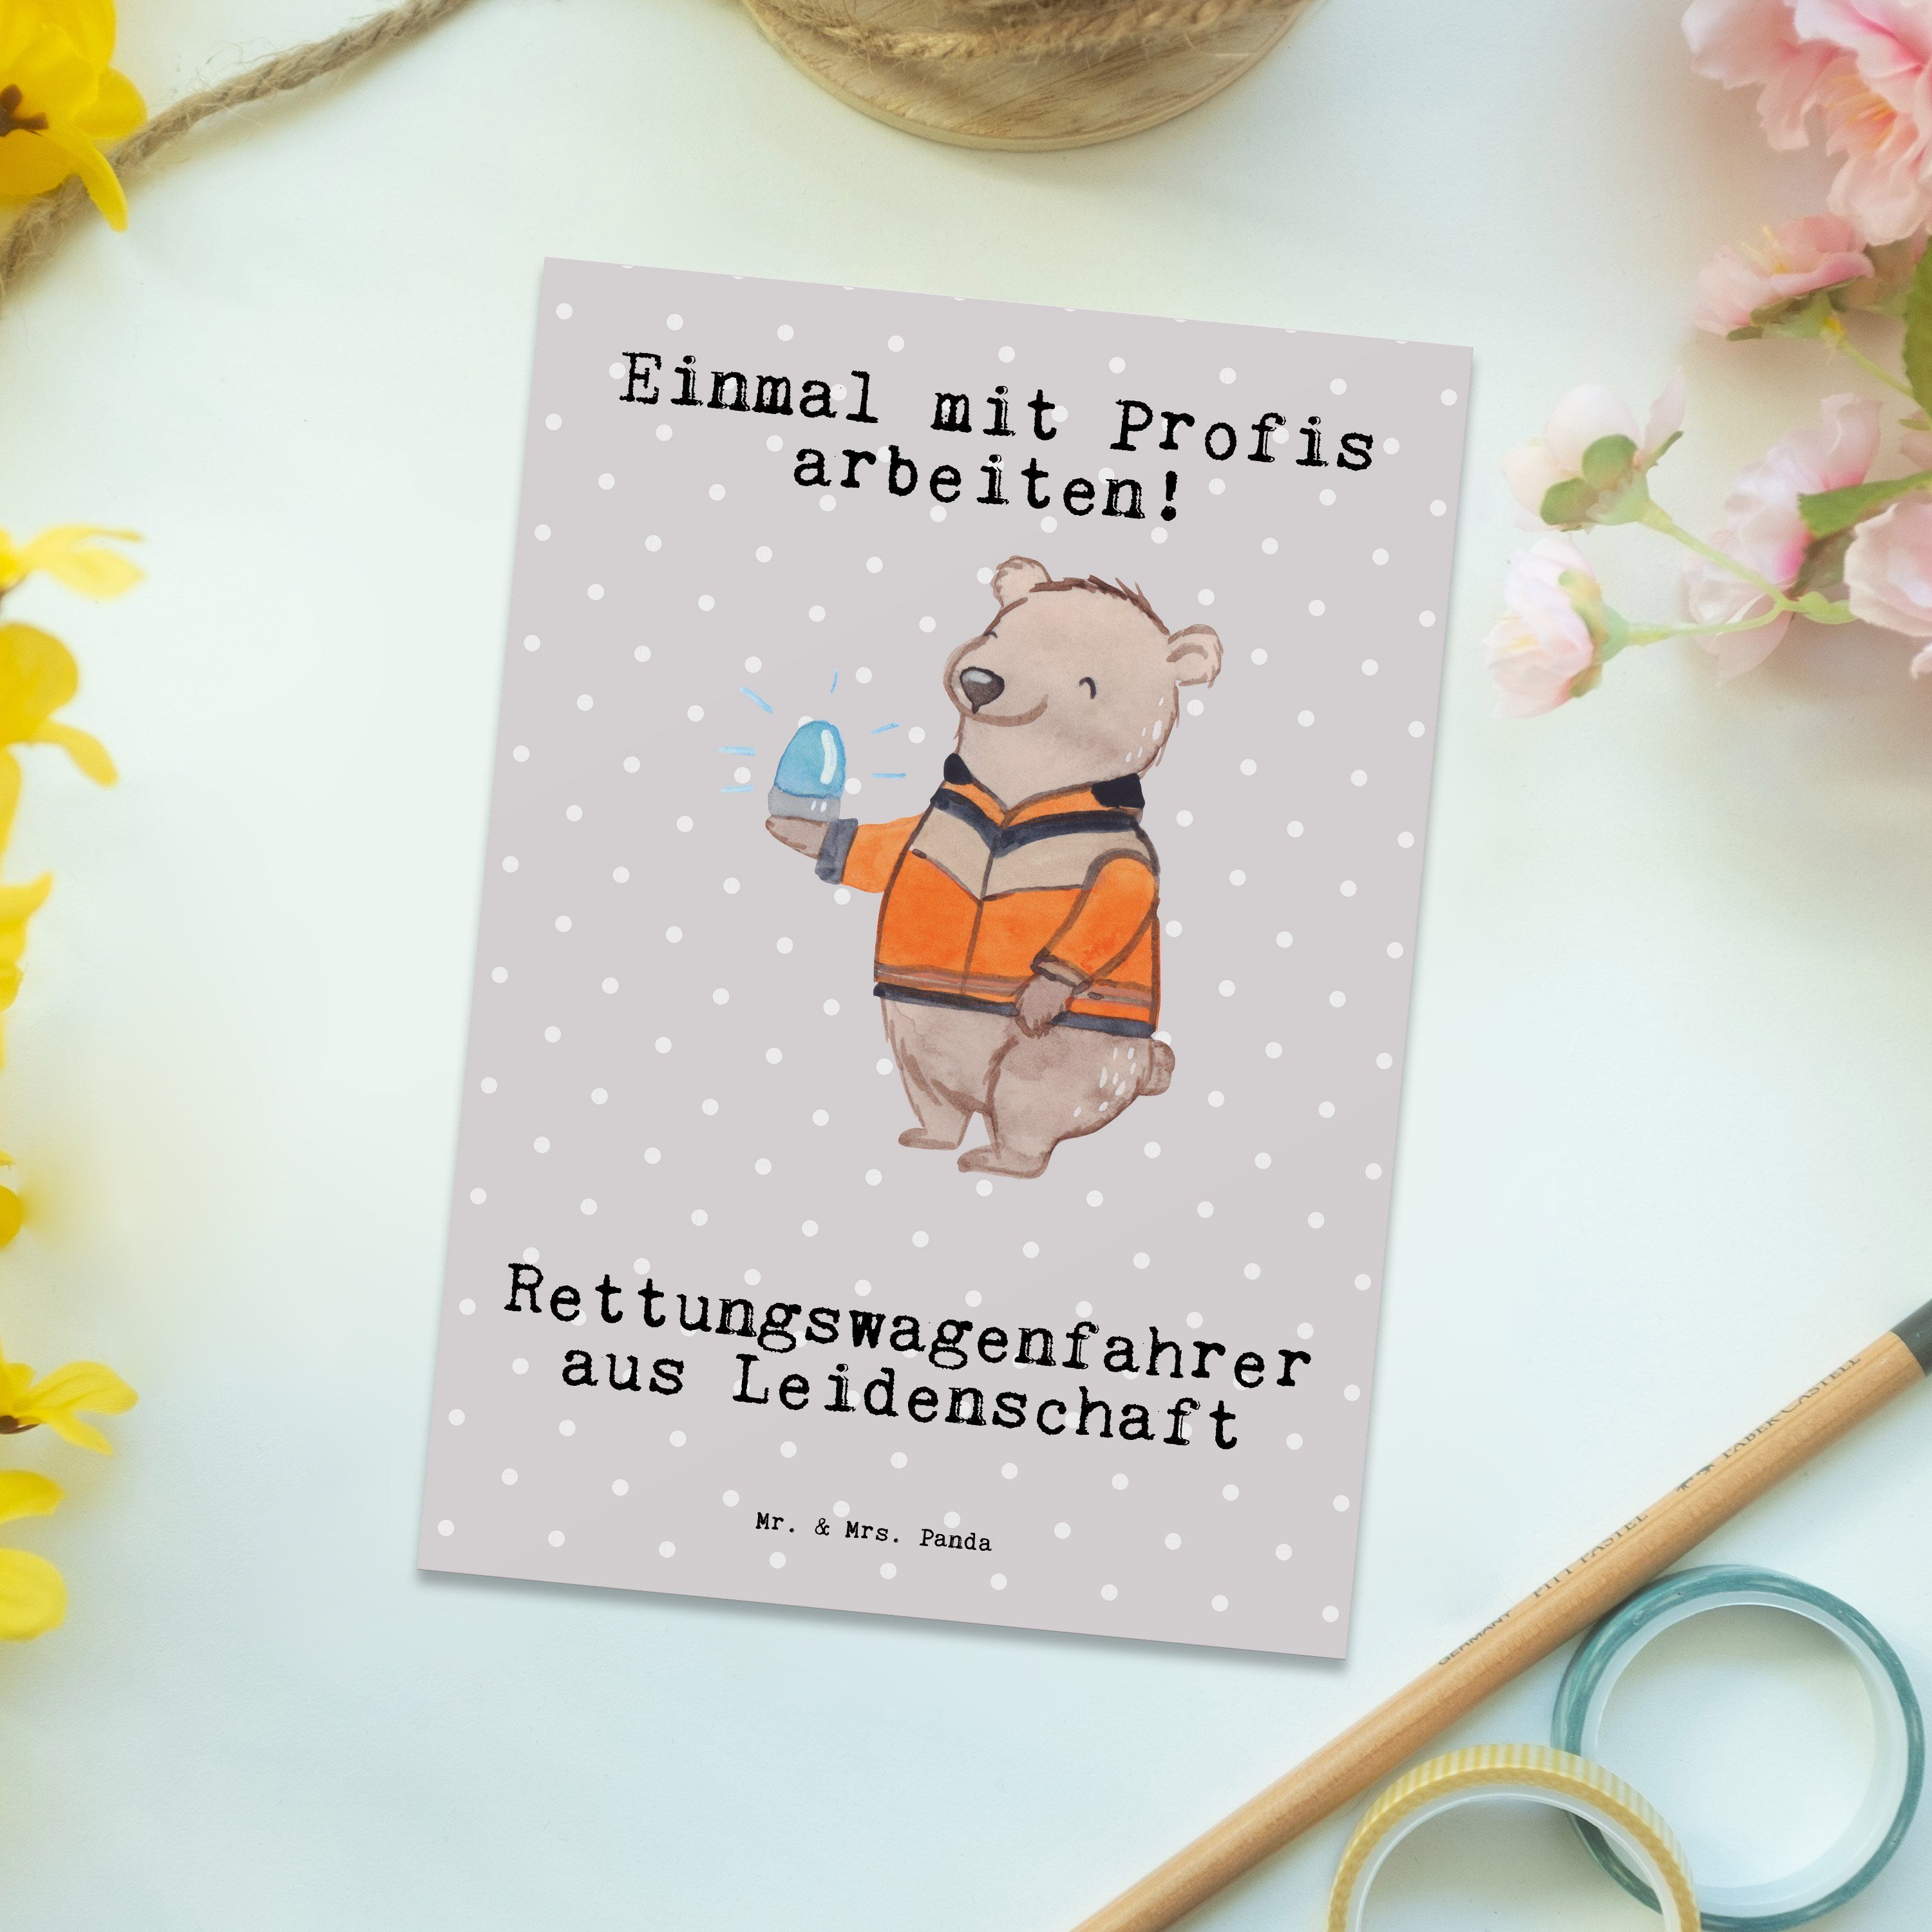 Grau Leidenschaft - Mrs. Mr. & aus Pastell Geschenk, Rettungswagenfahrer Postkarte - Panda Gesch